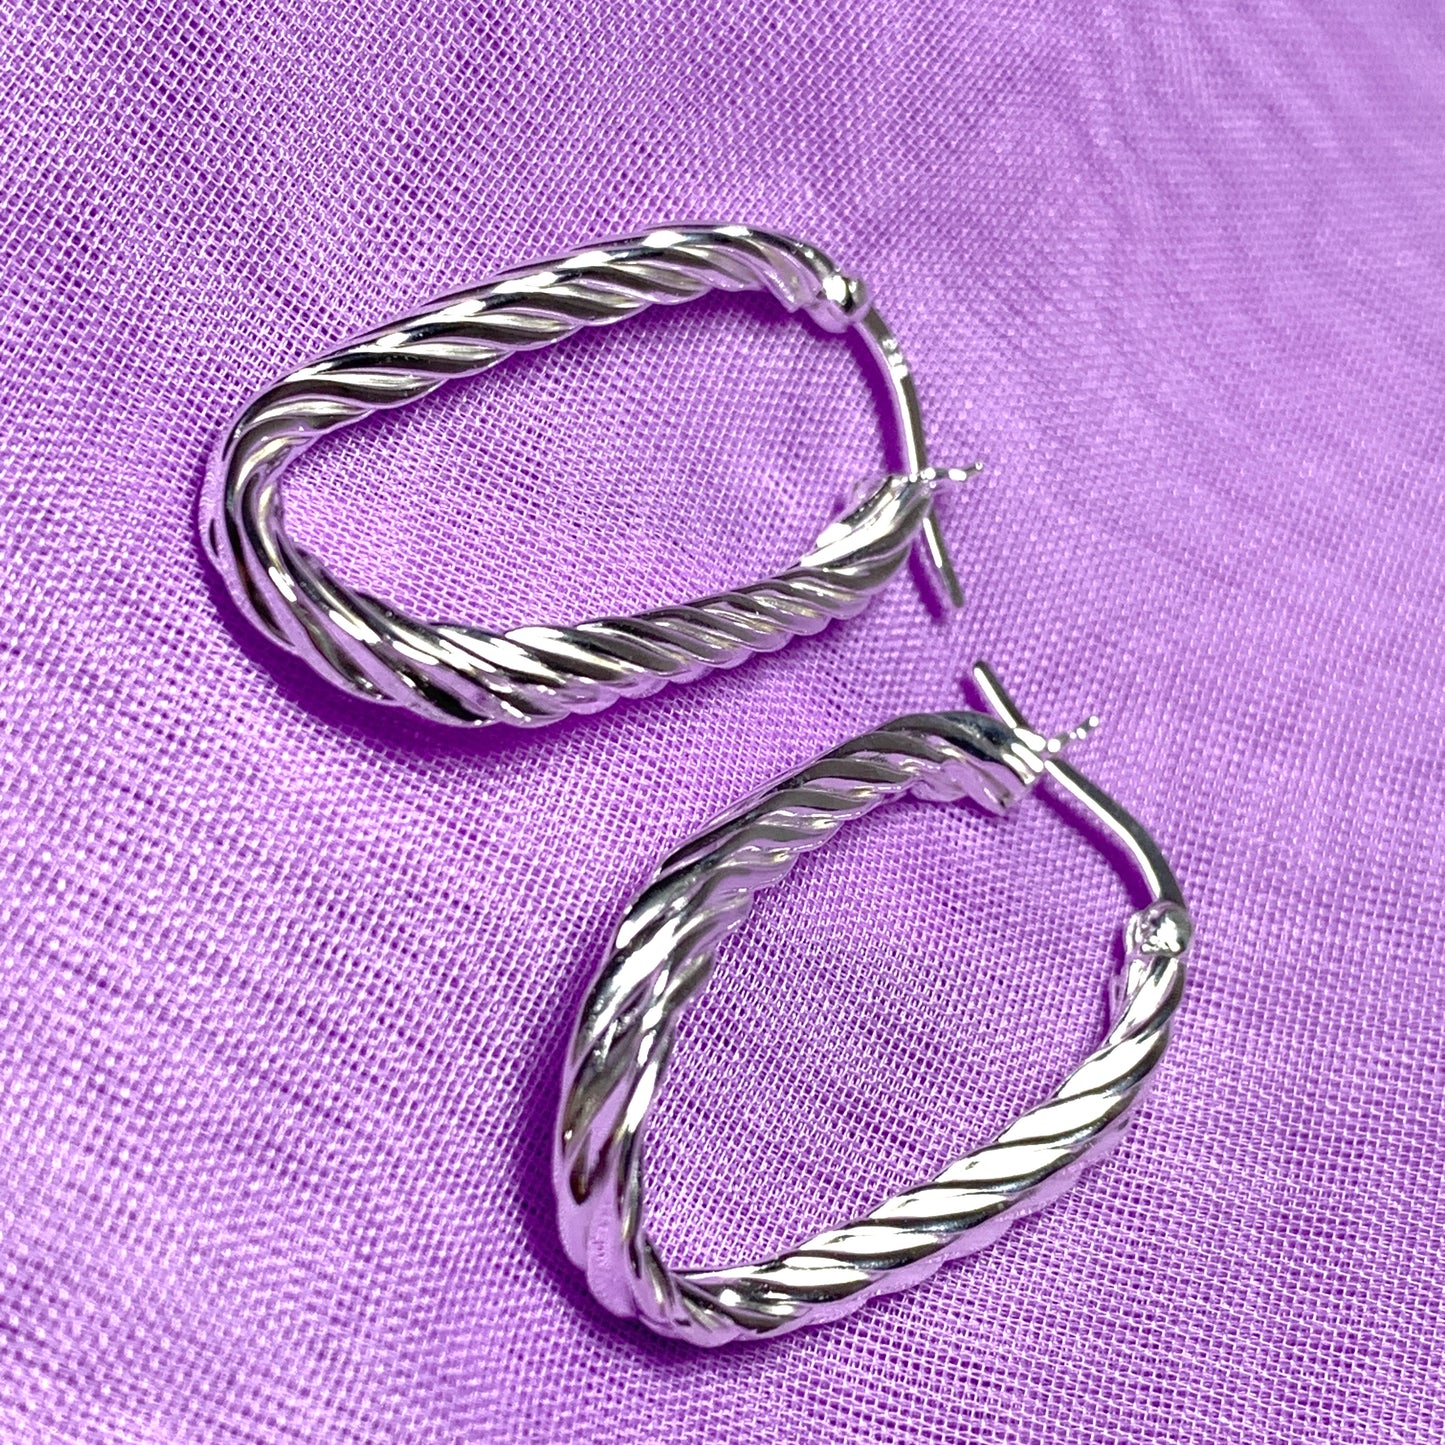 Oval patterned hoop earrings sterling silver